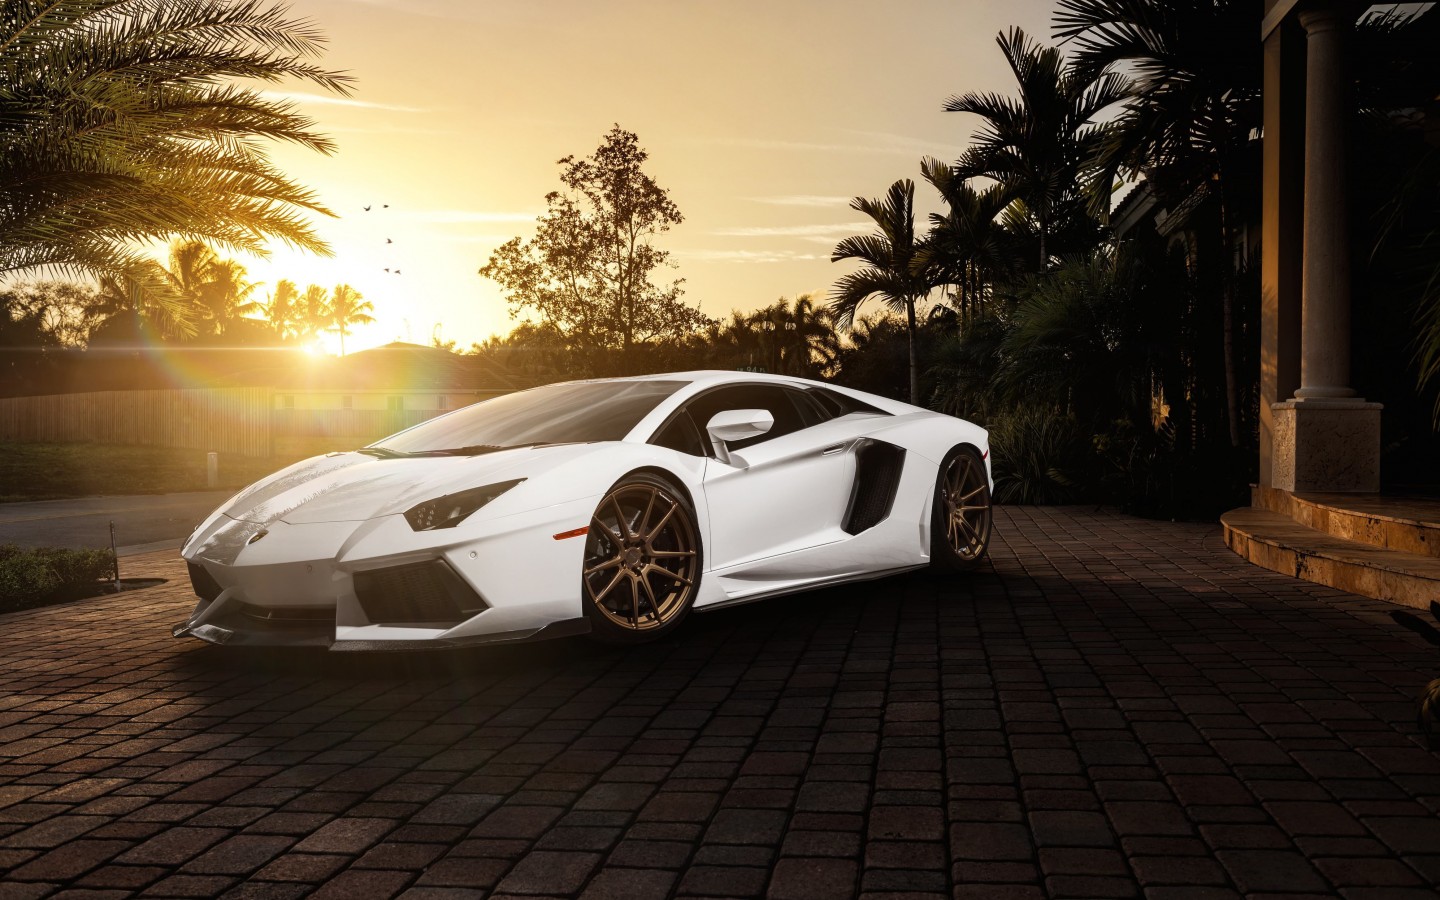 Lamborghini Aventador LP700-4 in White Wallpaper for Desktop 1440x900